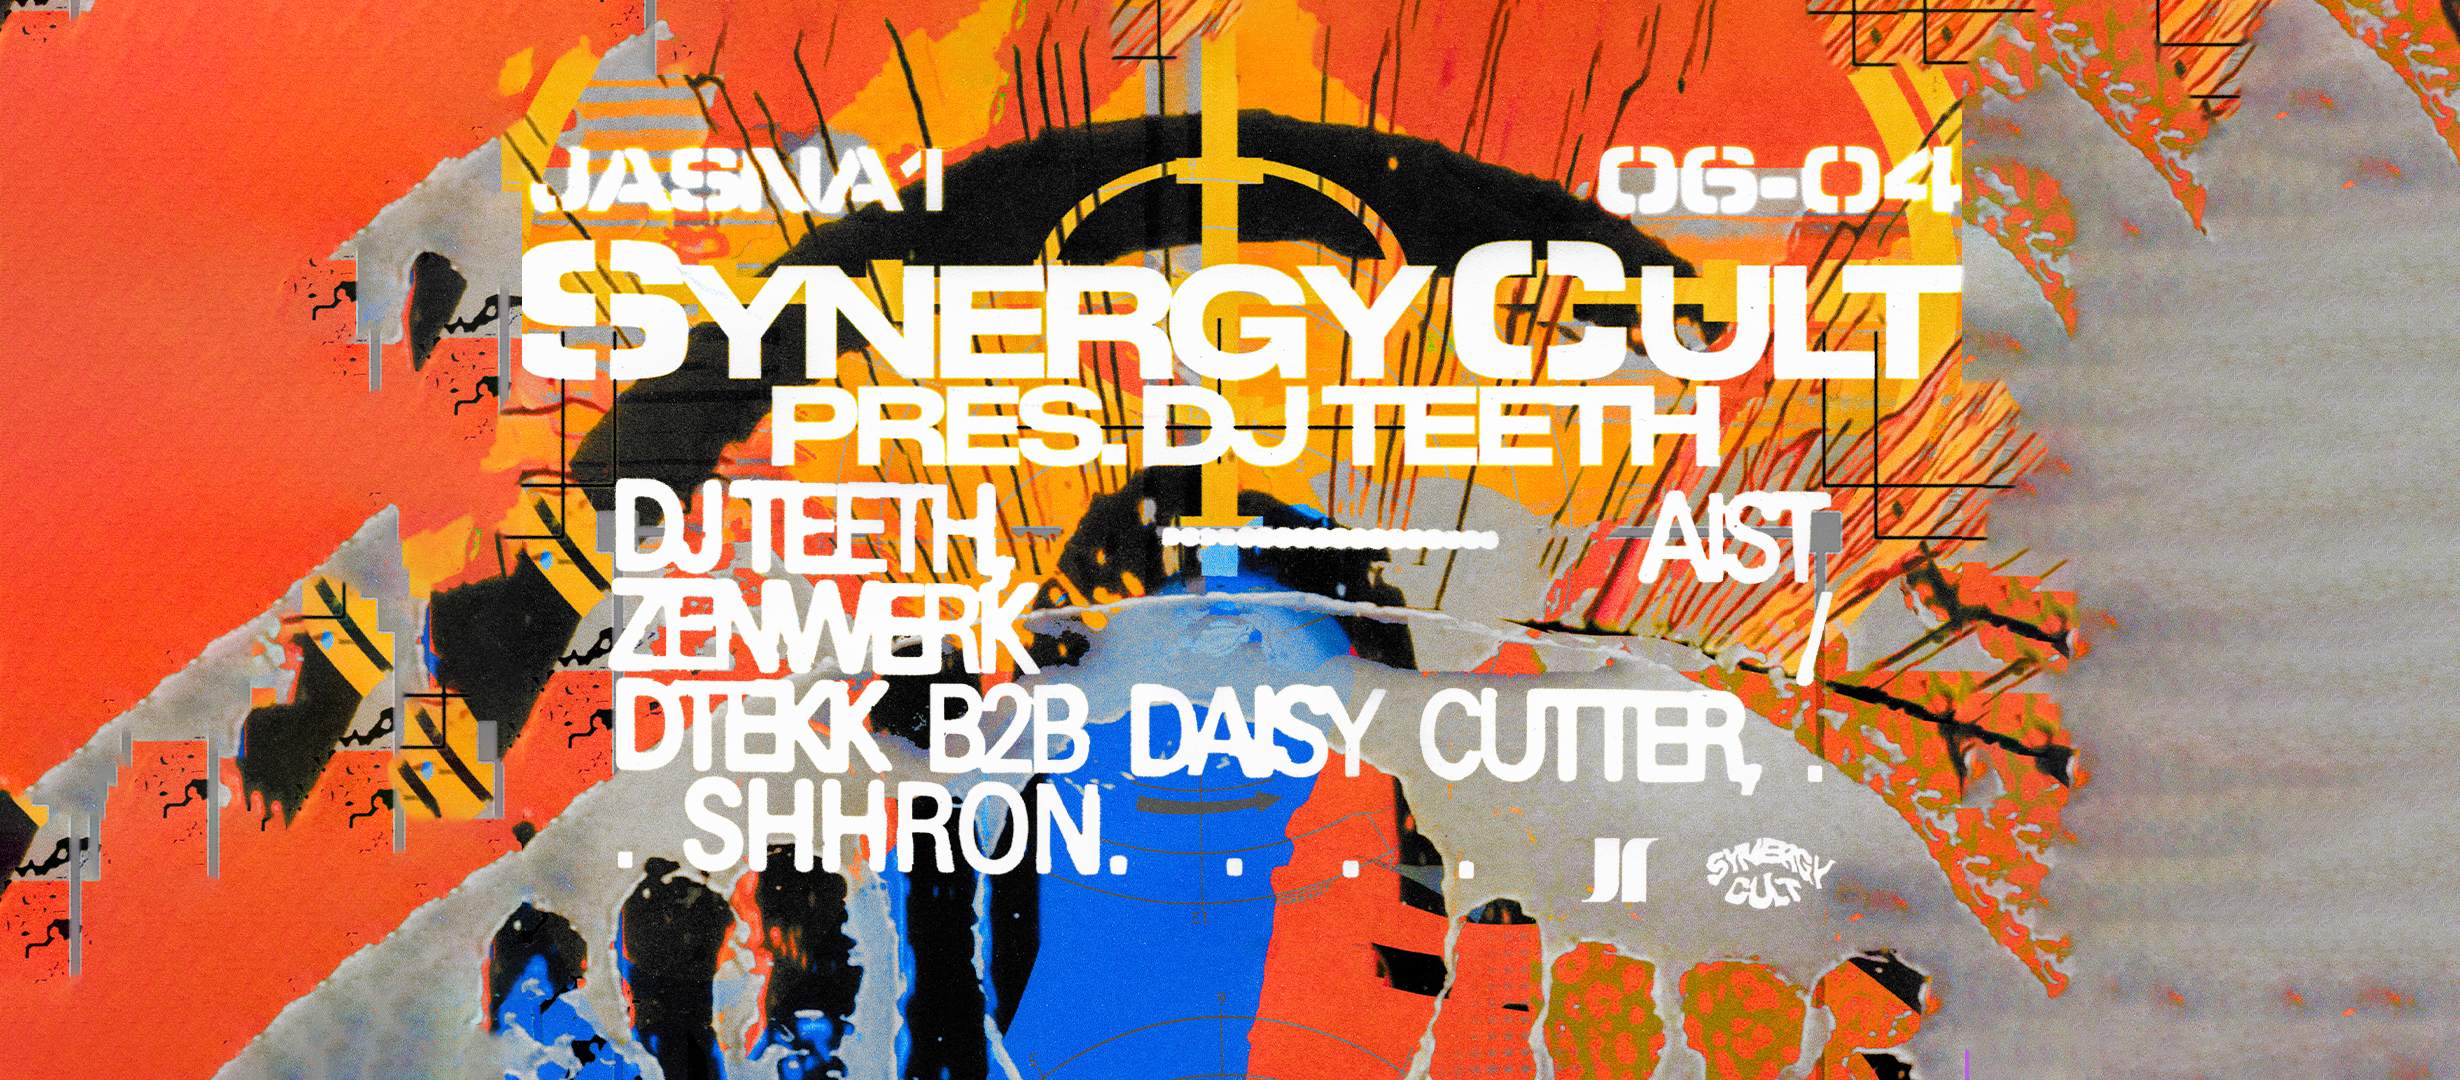 J1 - Synergy Cult with DJ TEETH, Aist, zenwerk / dtekk b2b daisy cutter, shhron - Página frontal